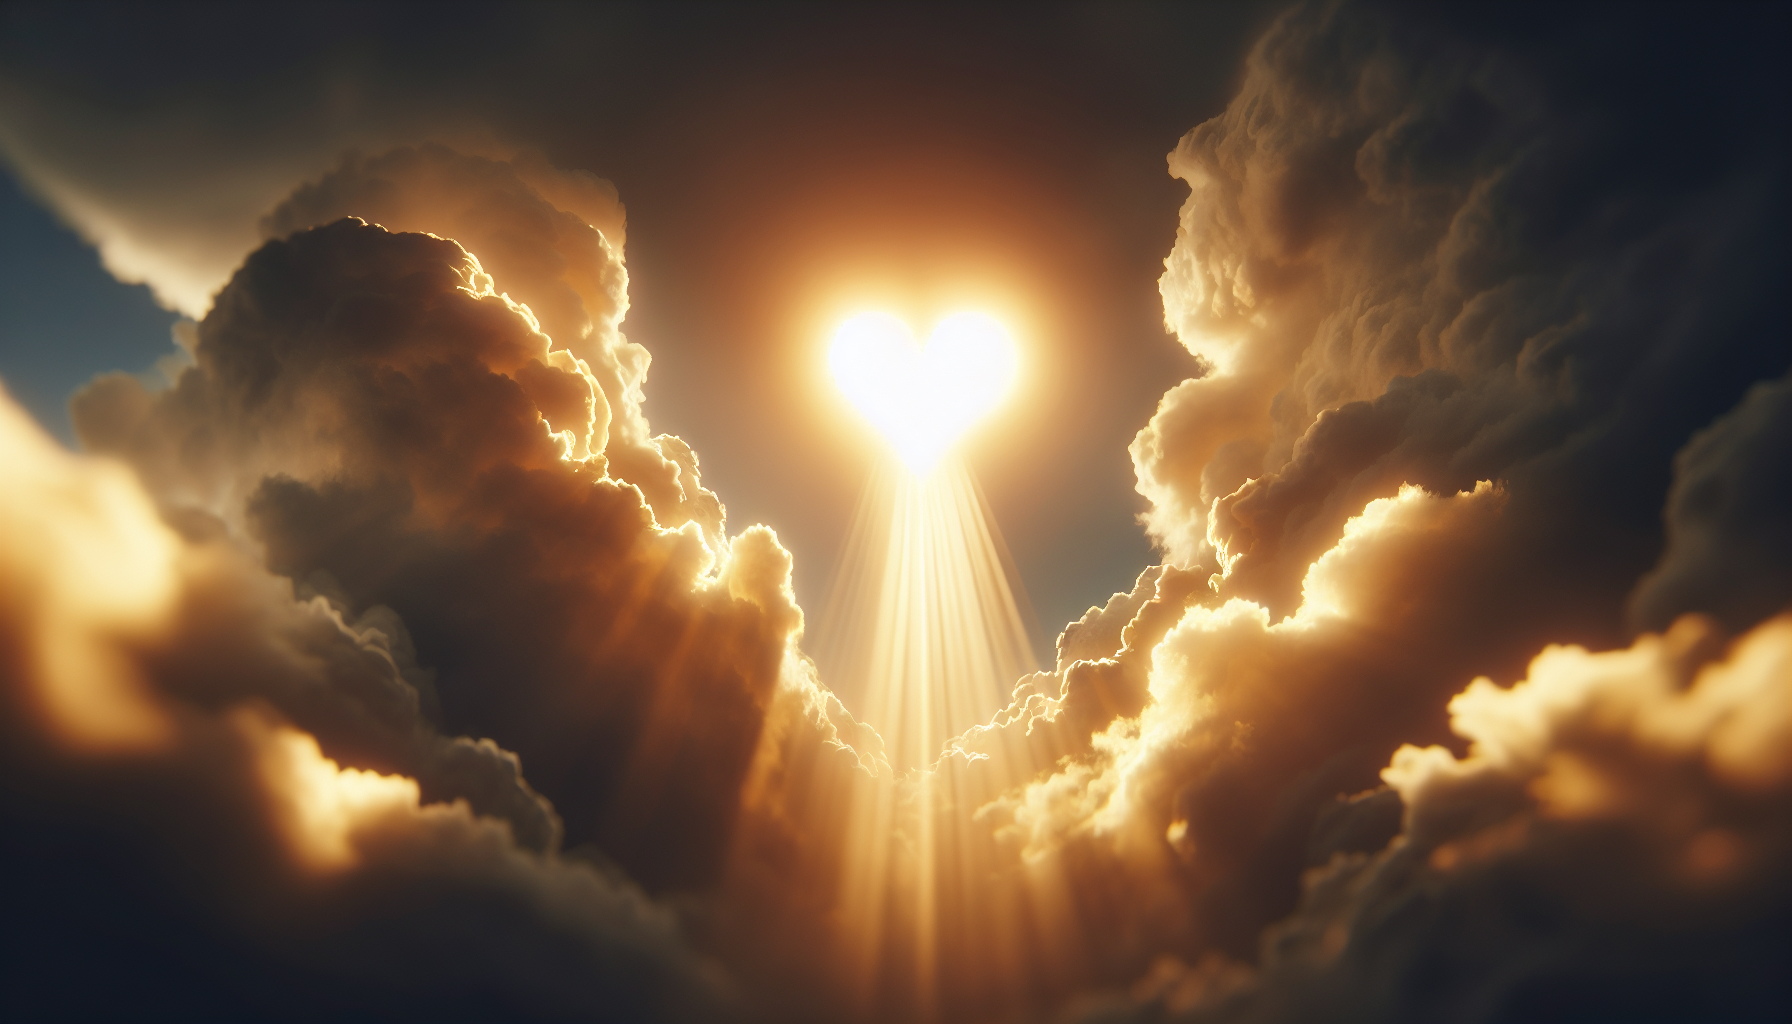 Divine light shining through clouds